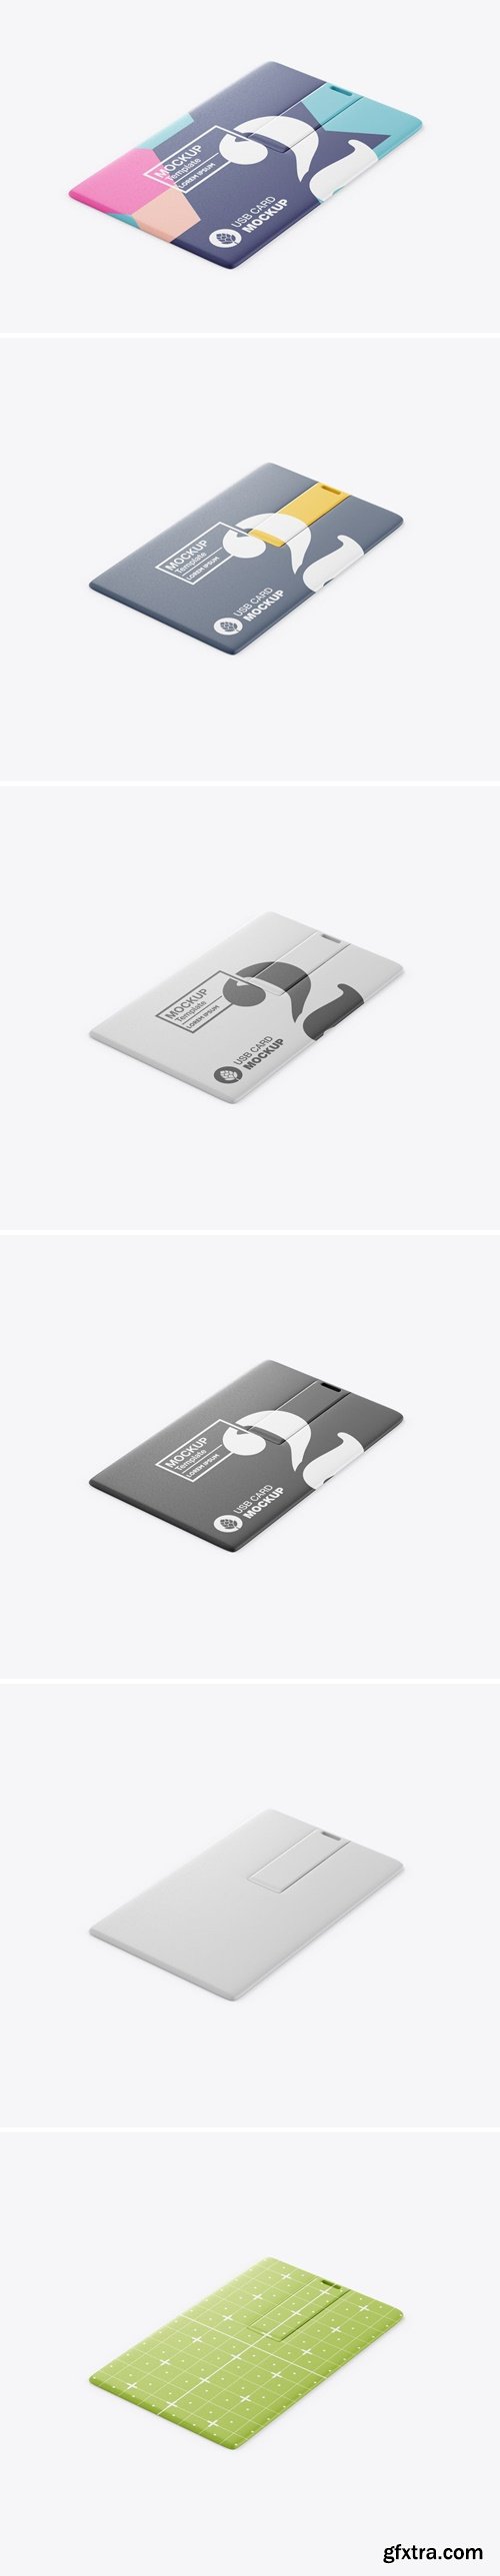 USB Flash Drive Card Mockup 992QSBS